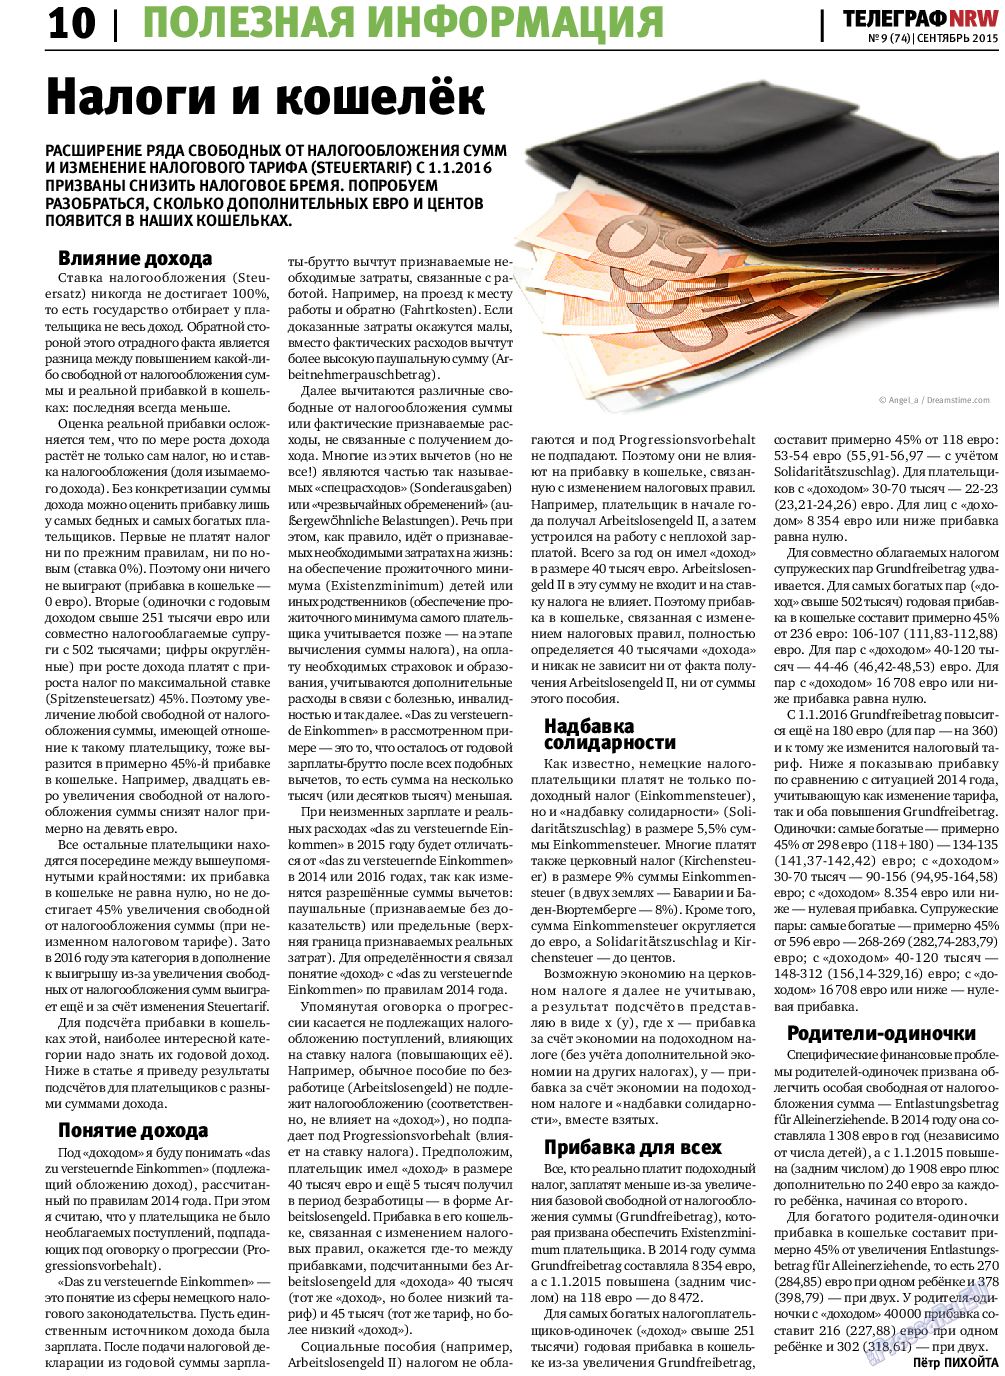 Телеграф NRW, газета. 2015 №9 стр.10